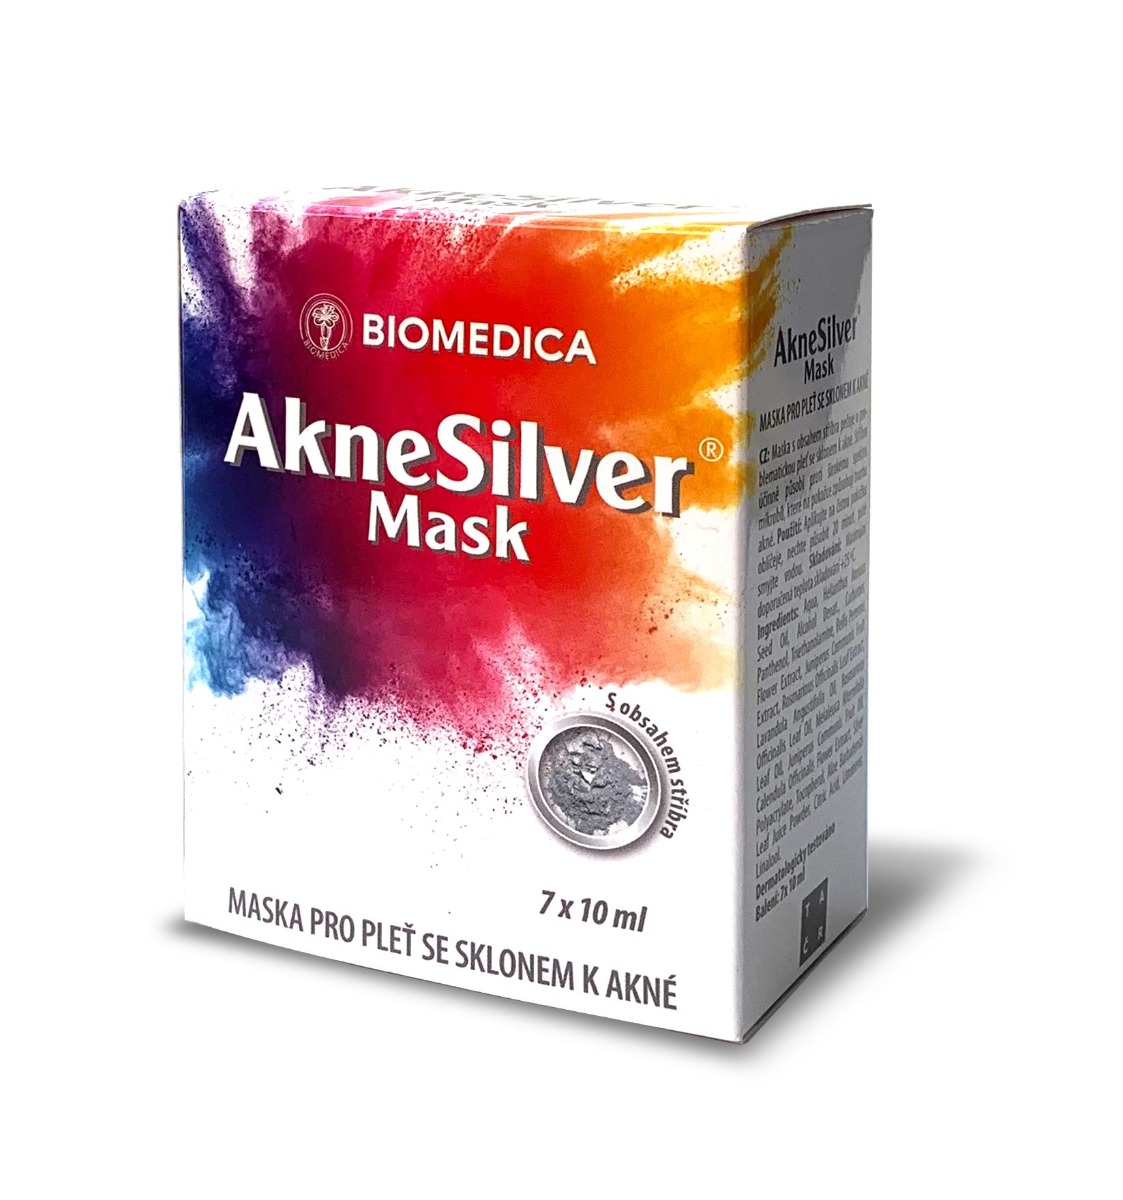 Biomedica AkneSilver Mask 7x10 ml Biomedica